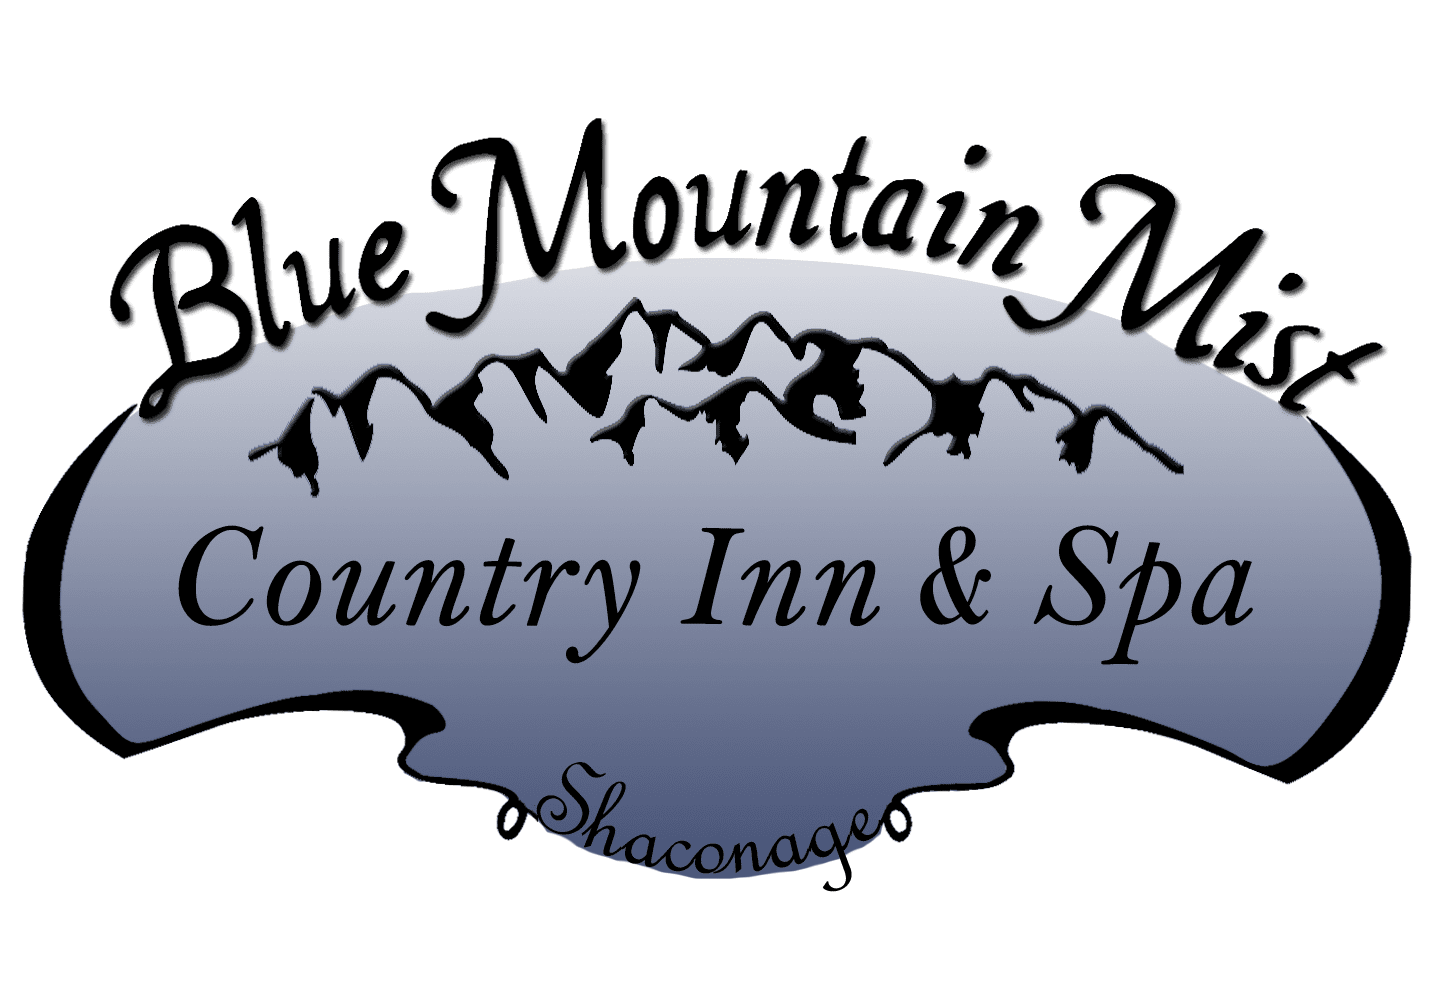 Blue Mountain Mist Country Inn & Spa